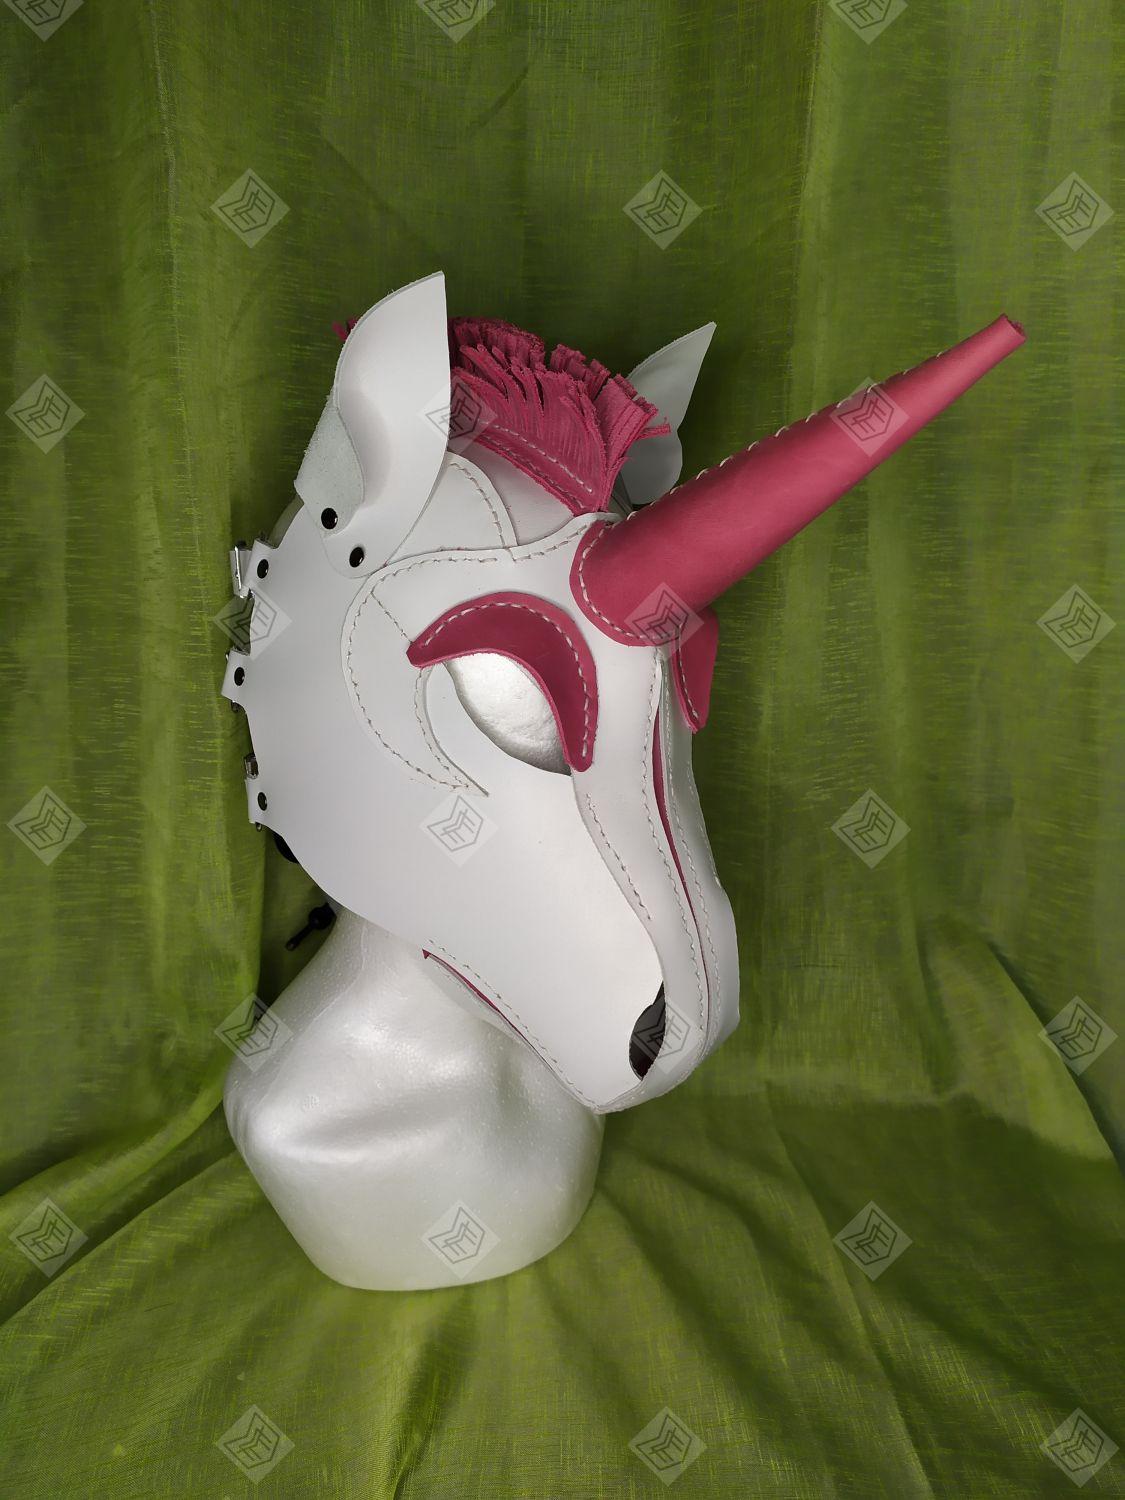 Máscara Unicornio 